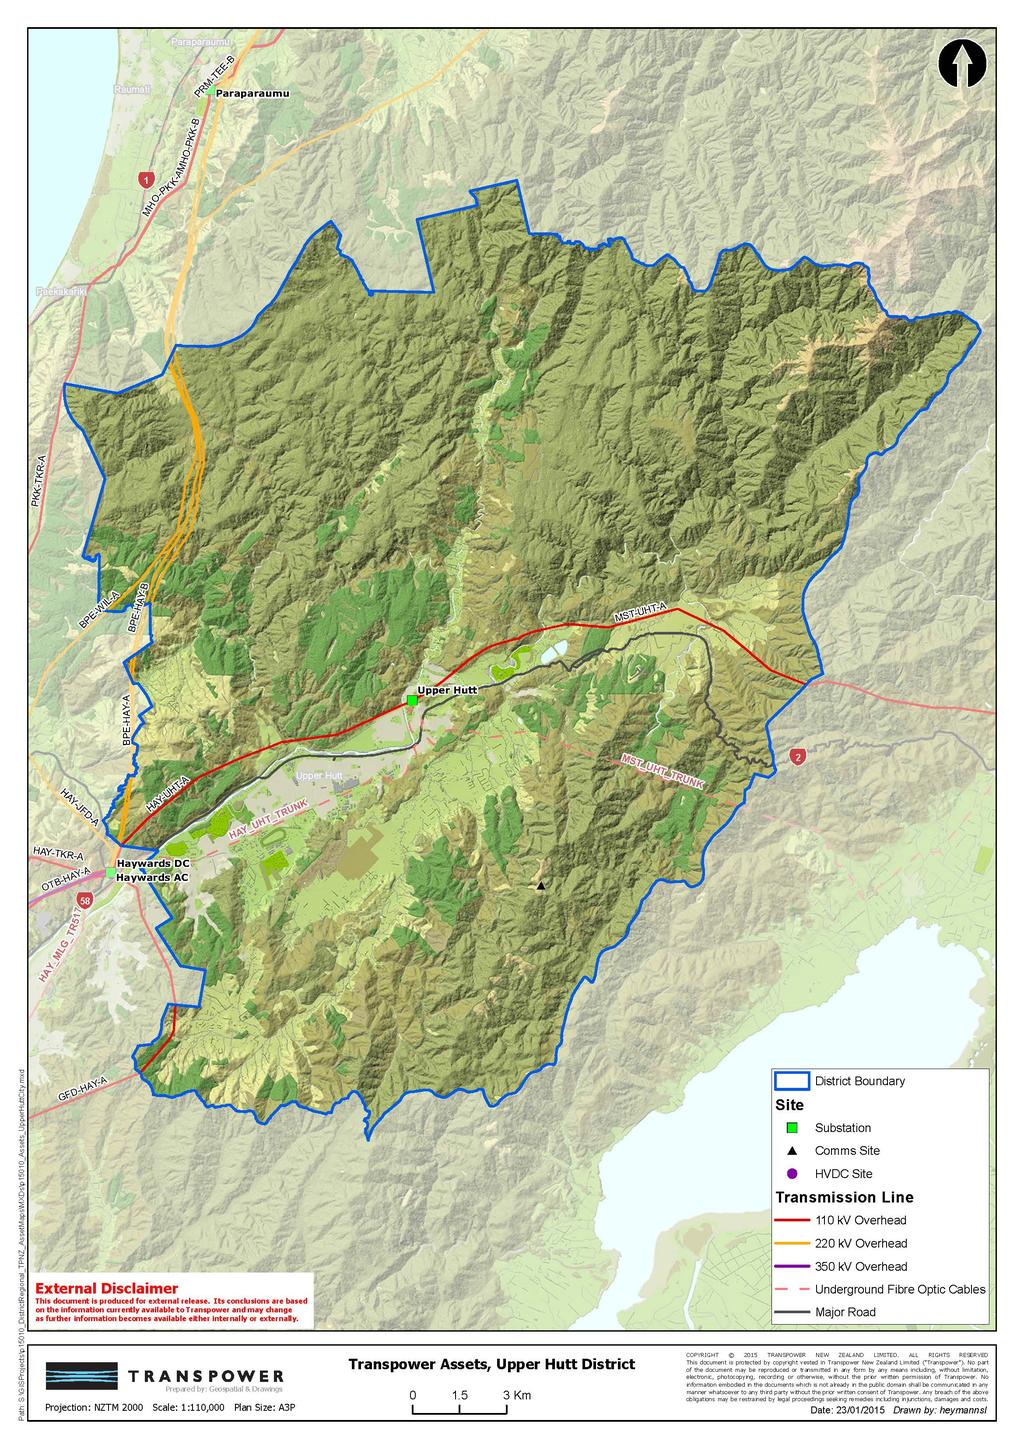 Attachment A: Upper Hutt District National Grid Transmission